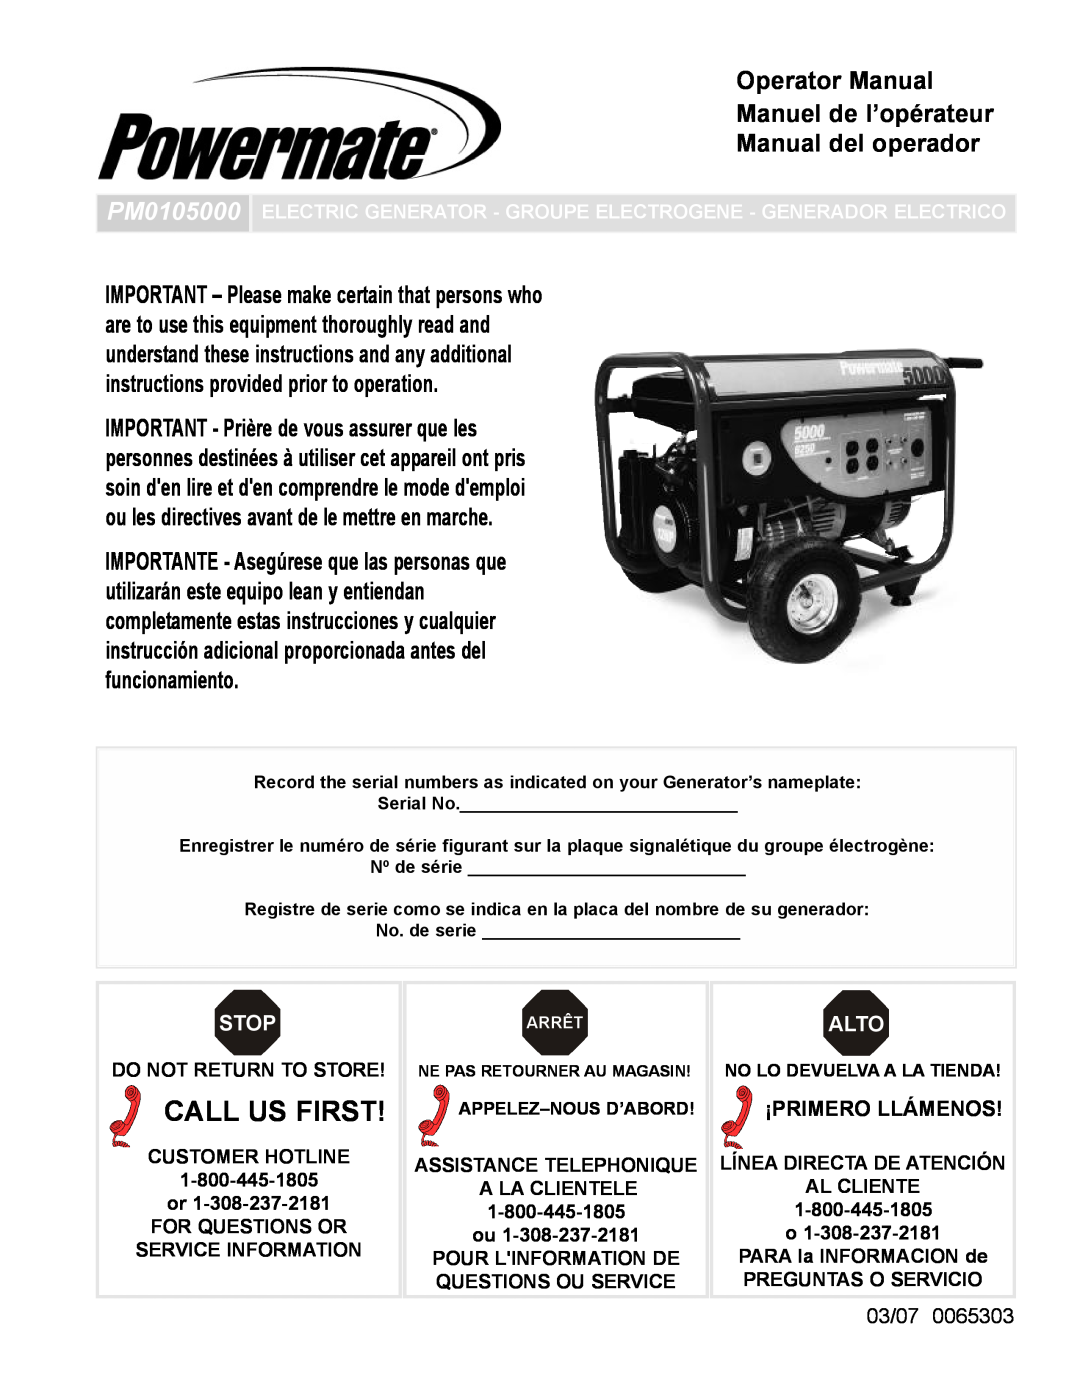 Powermate PM0105000 manual Stop, Alto, 03/07, Call Us First, Operator Manual Manuel de l’opérateur Manual del operador 